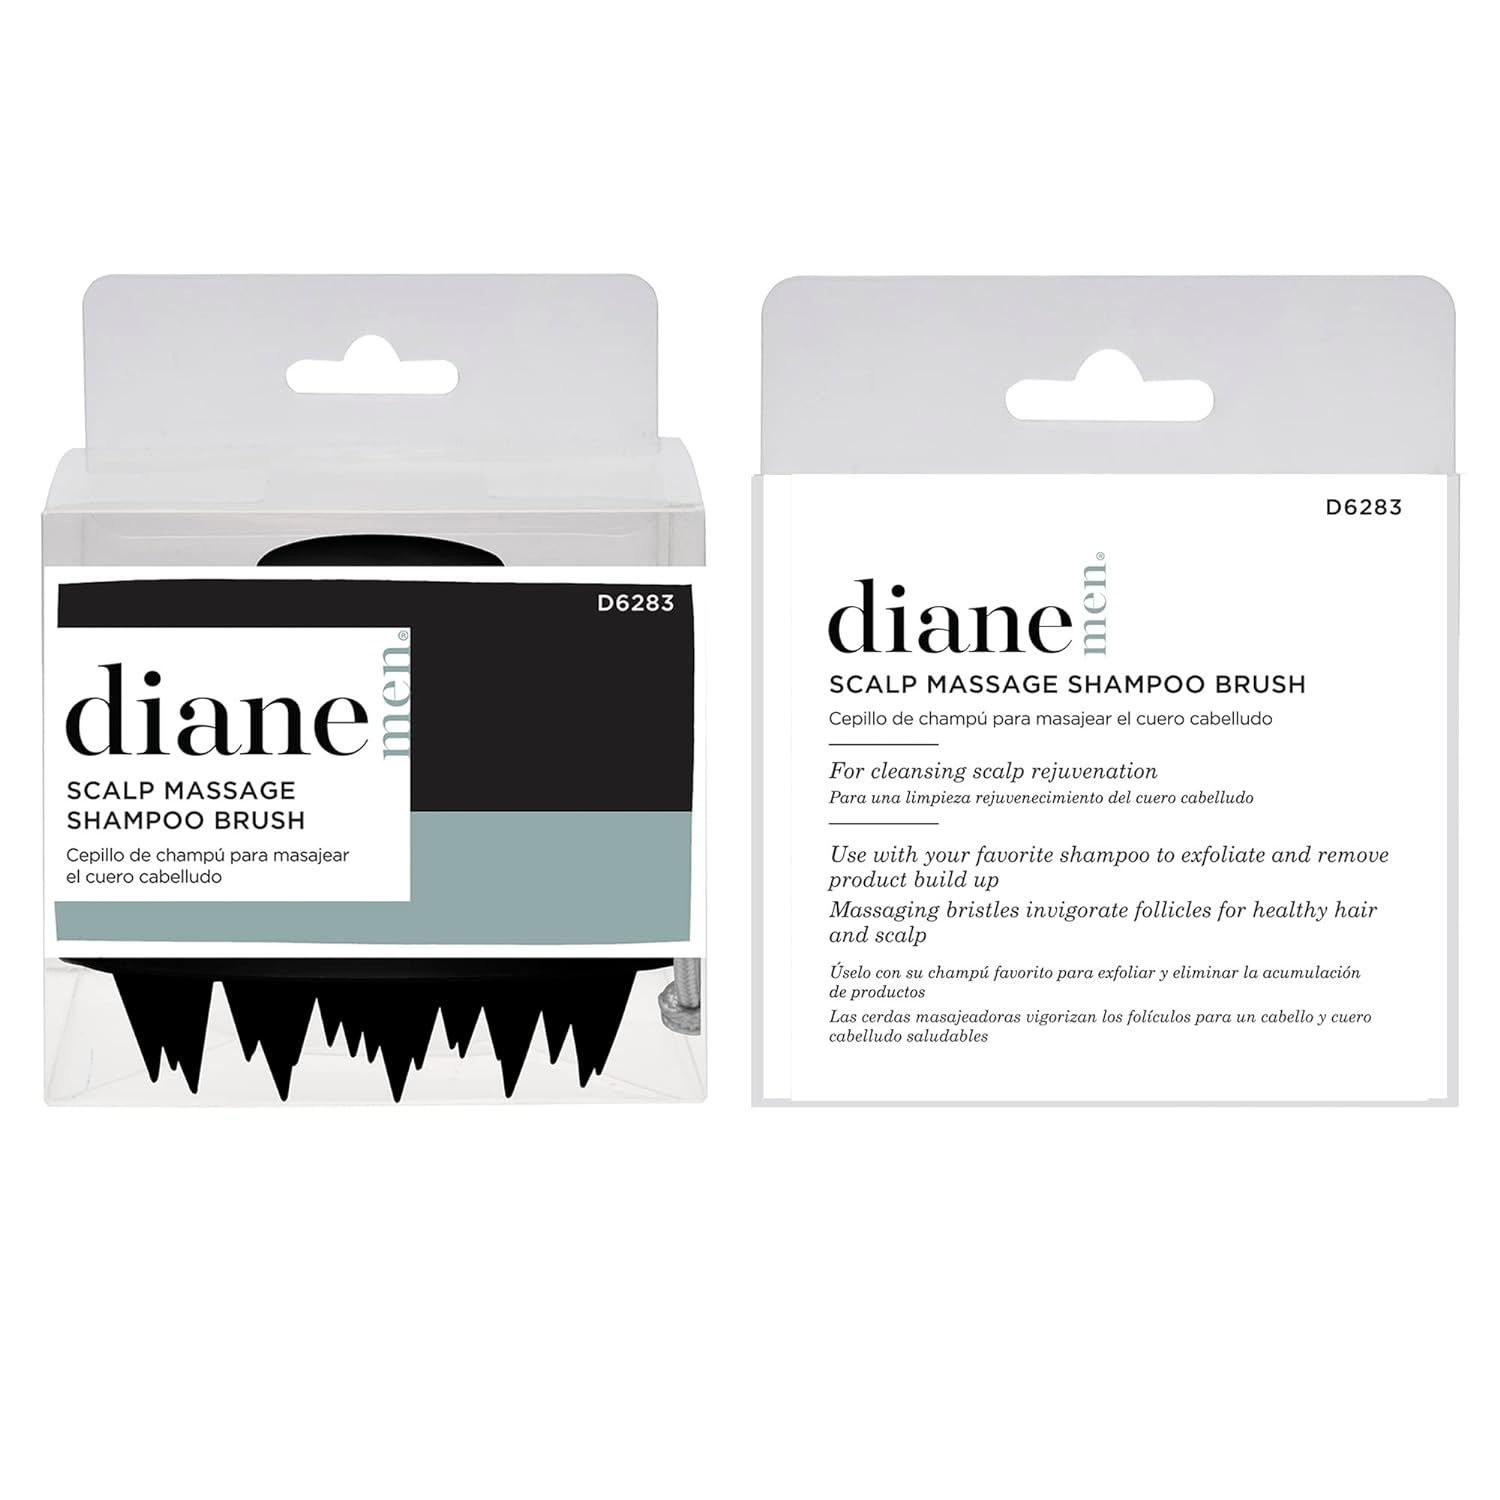 Diane Scalp Massage Shampoo Brush, D6283 : Beauty & Personal Care